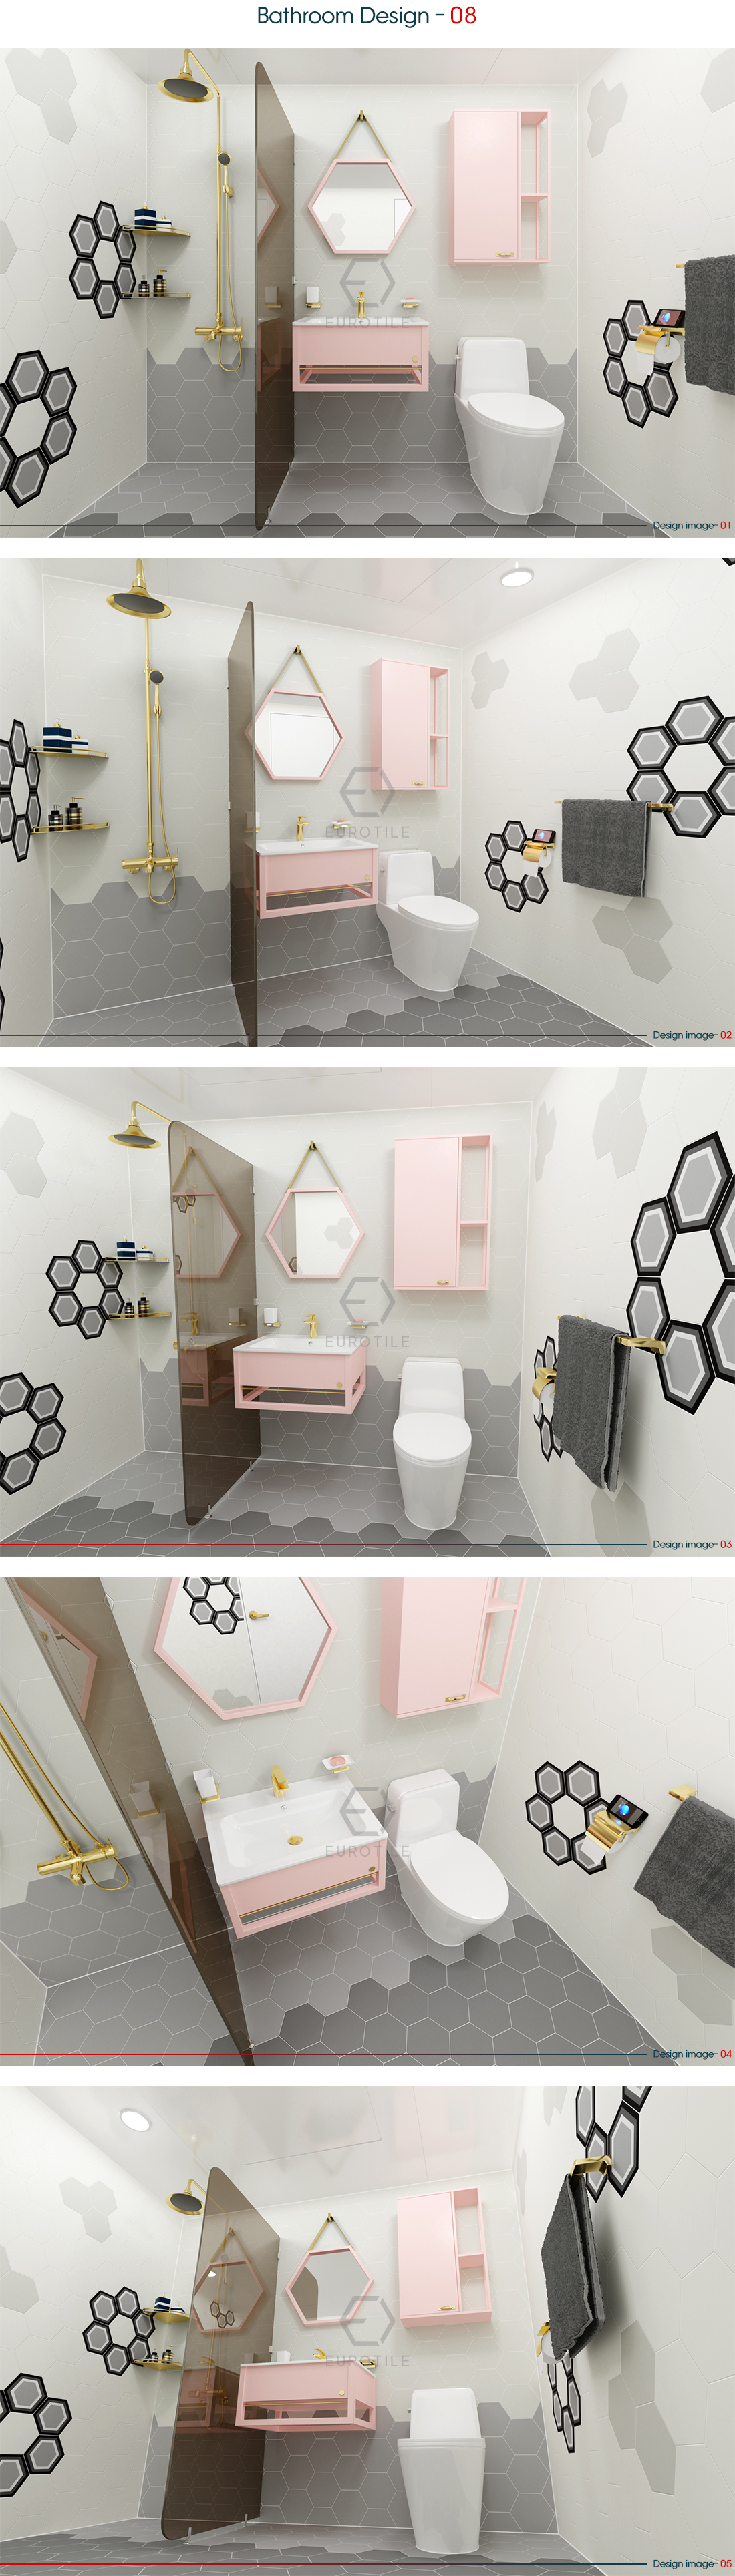 bathroomdesign-08_154456.jpg